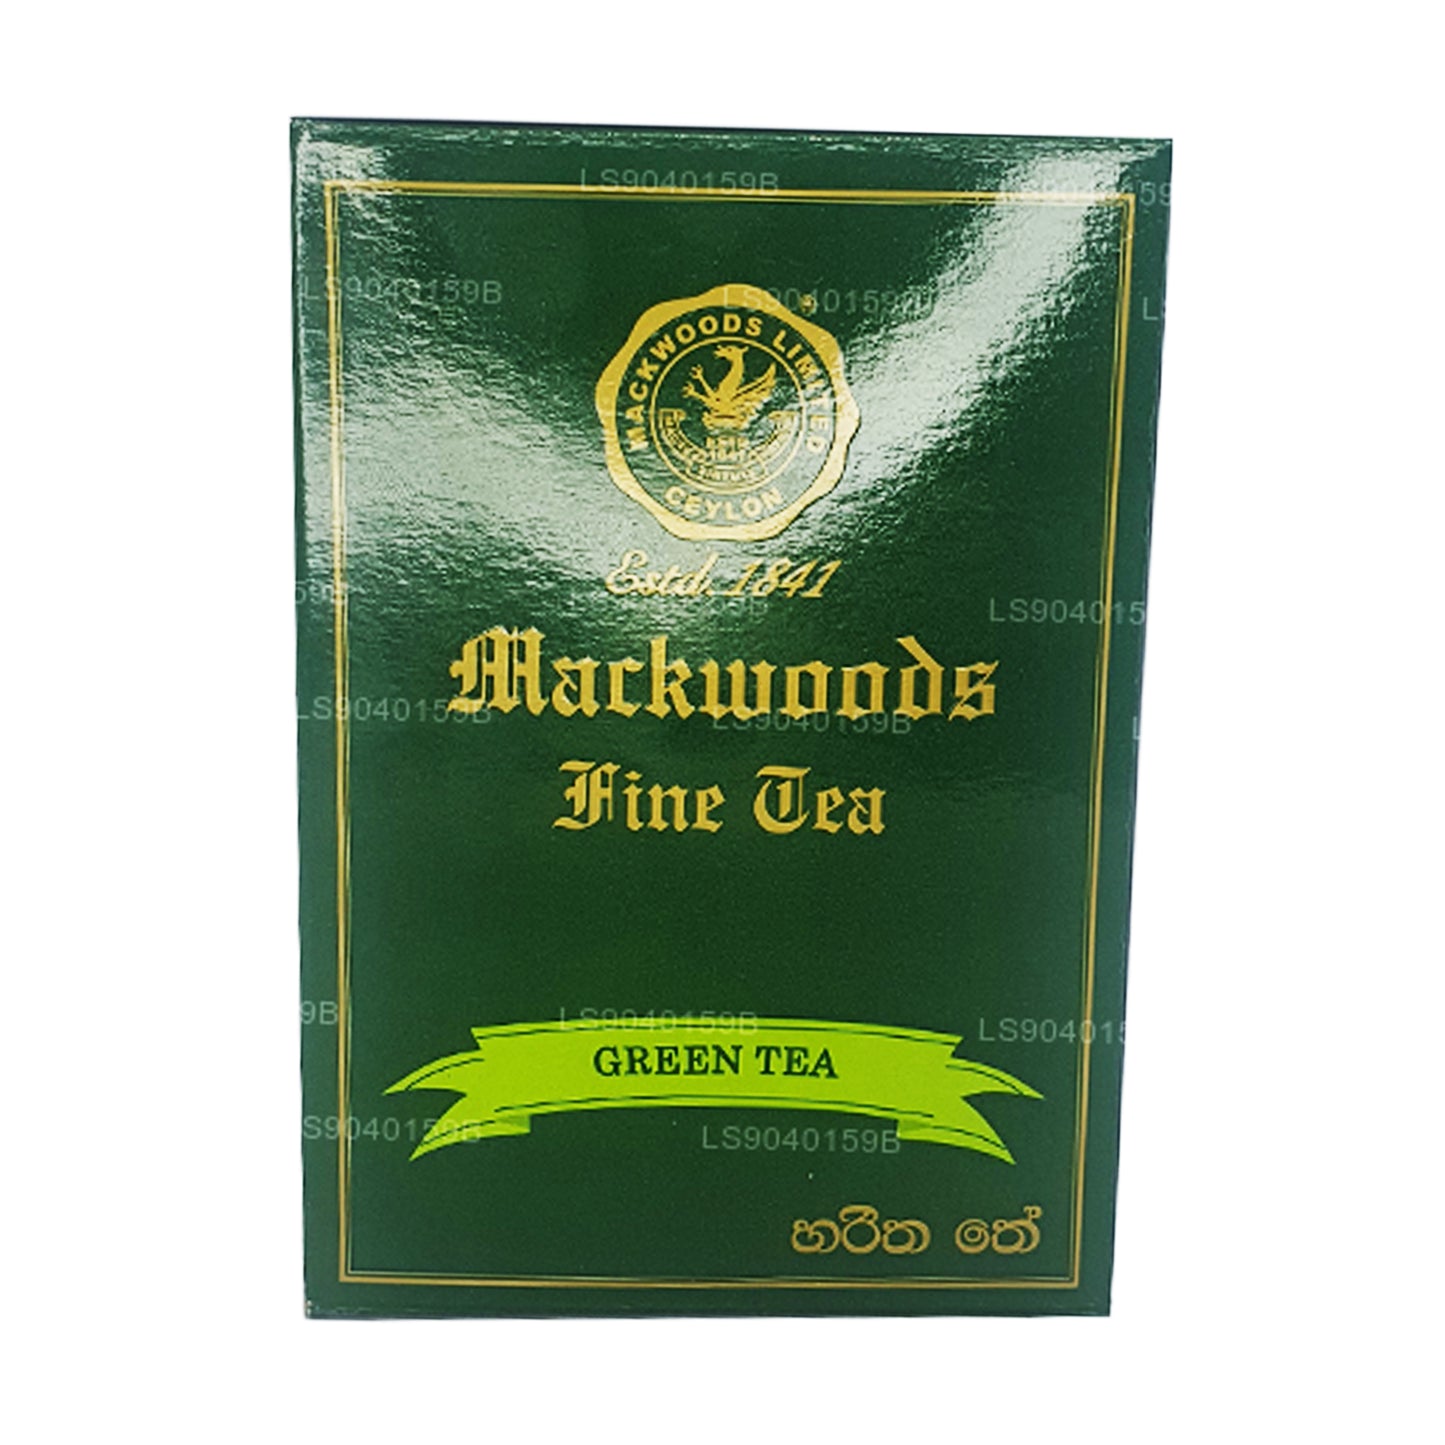 Tè verde sfuso Mackwoods (100g)